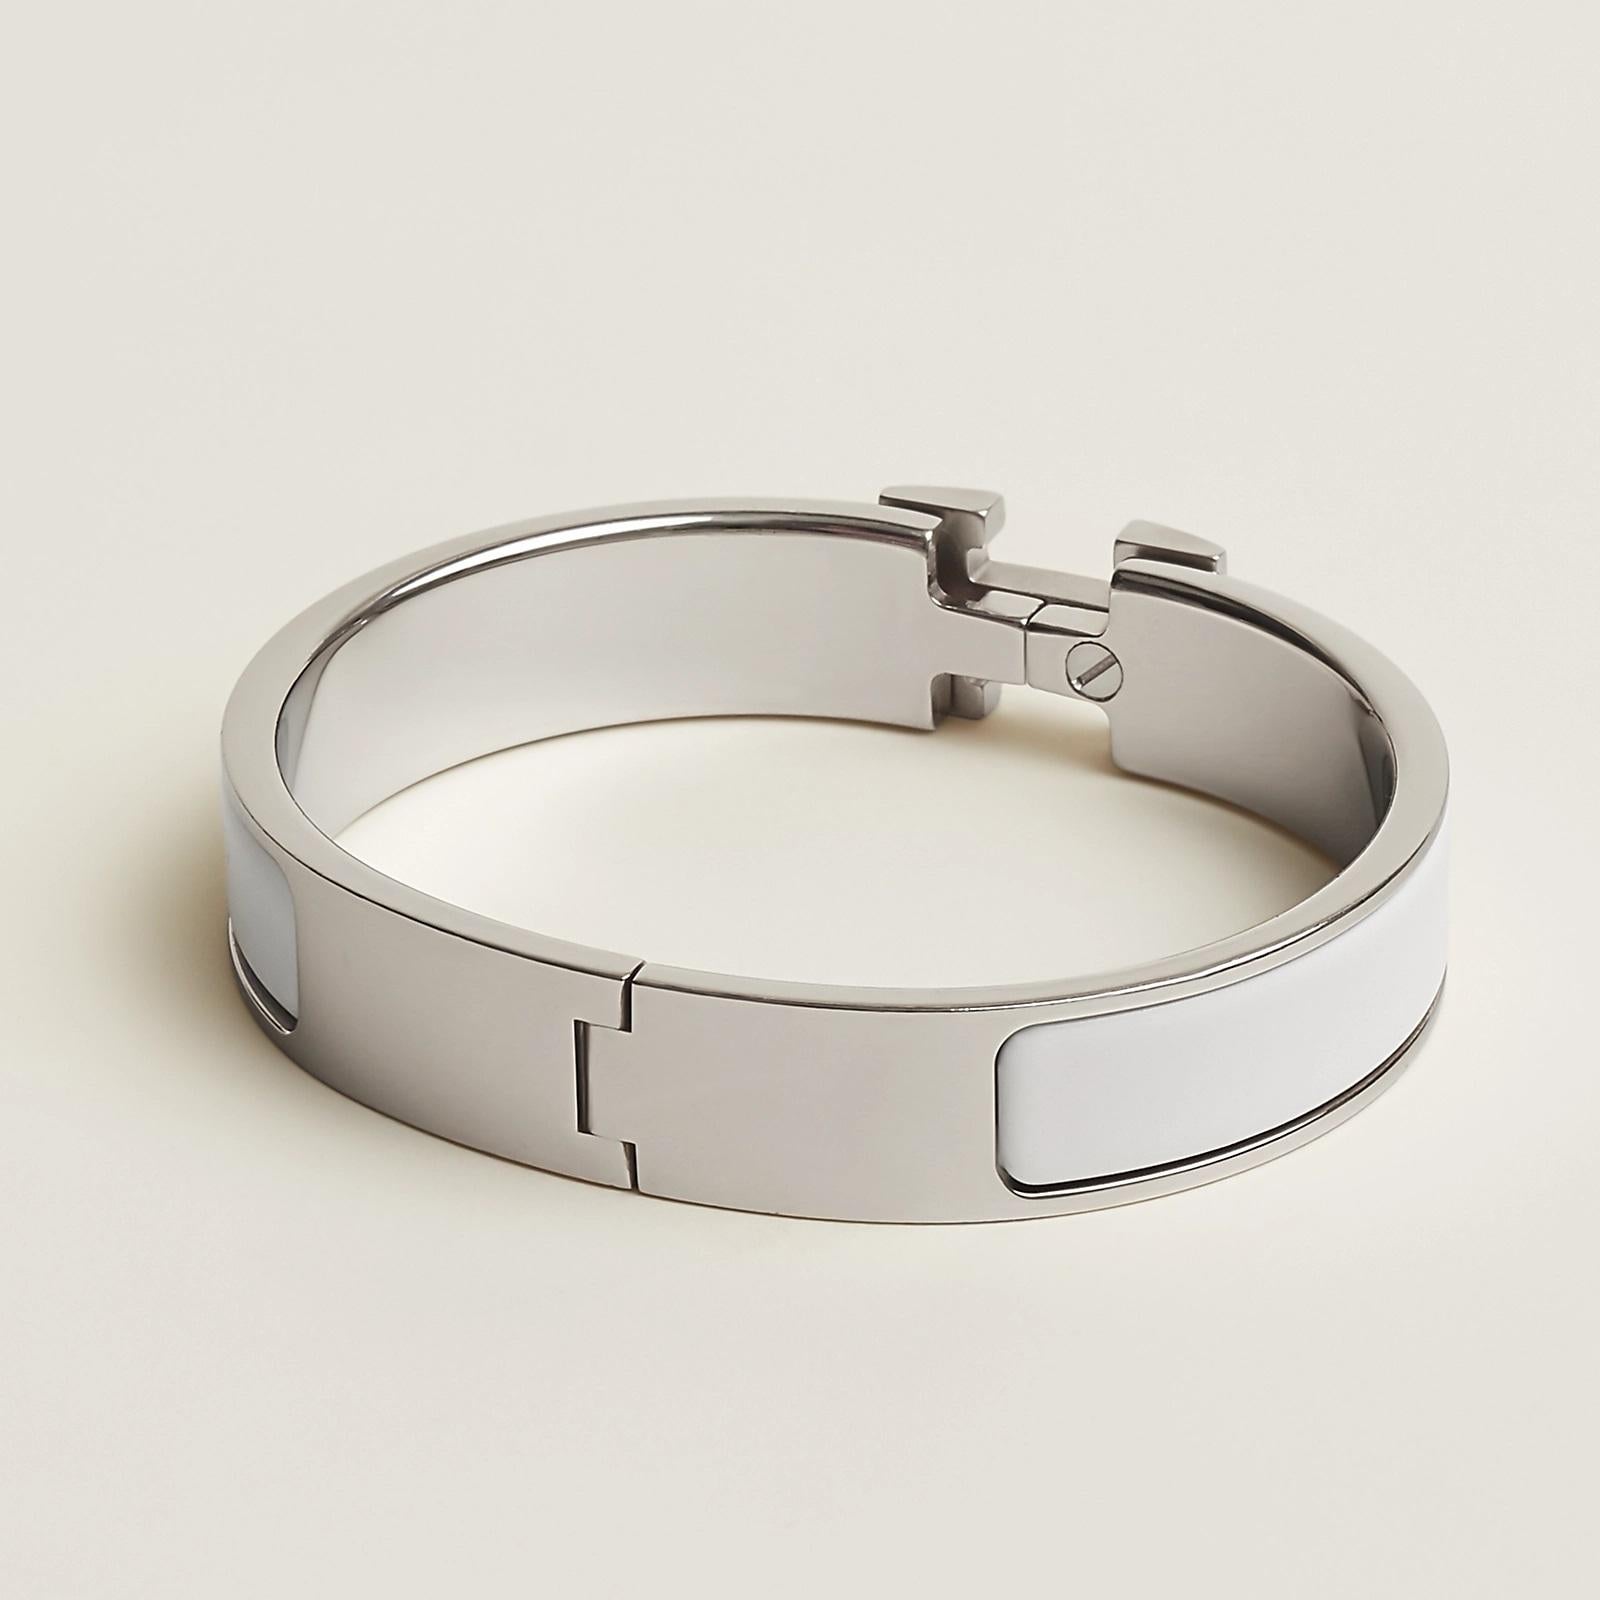 Color: White Size GM 19cm
Narrow bracelet in enamel with palladium-plated hardware.
Wrist size: 19 cm  Width: 12 mm